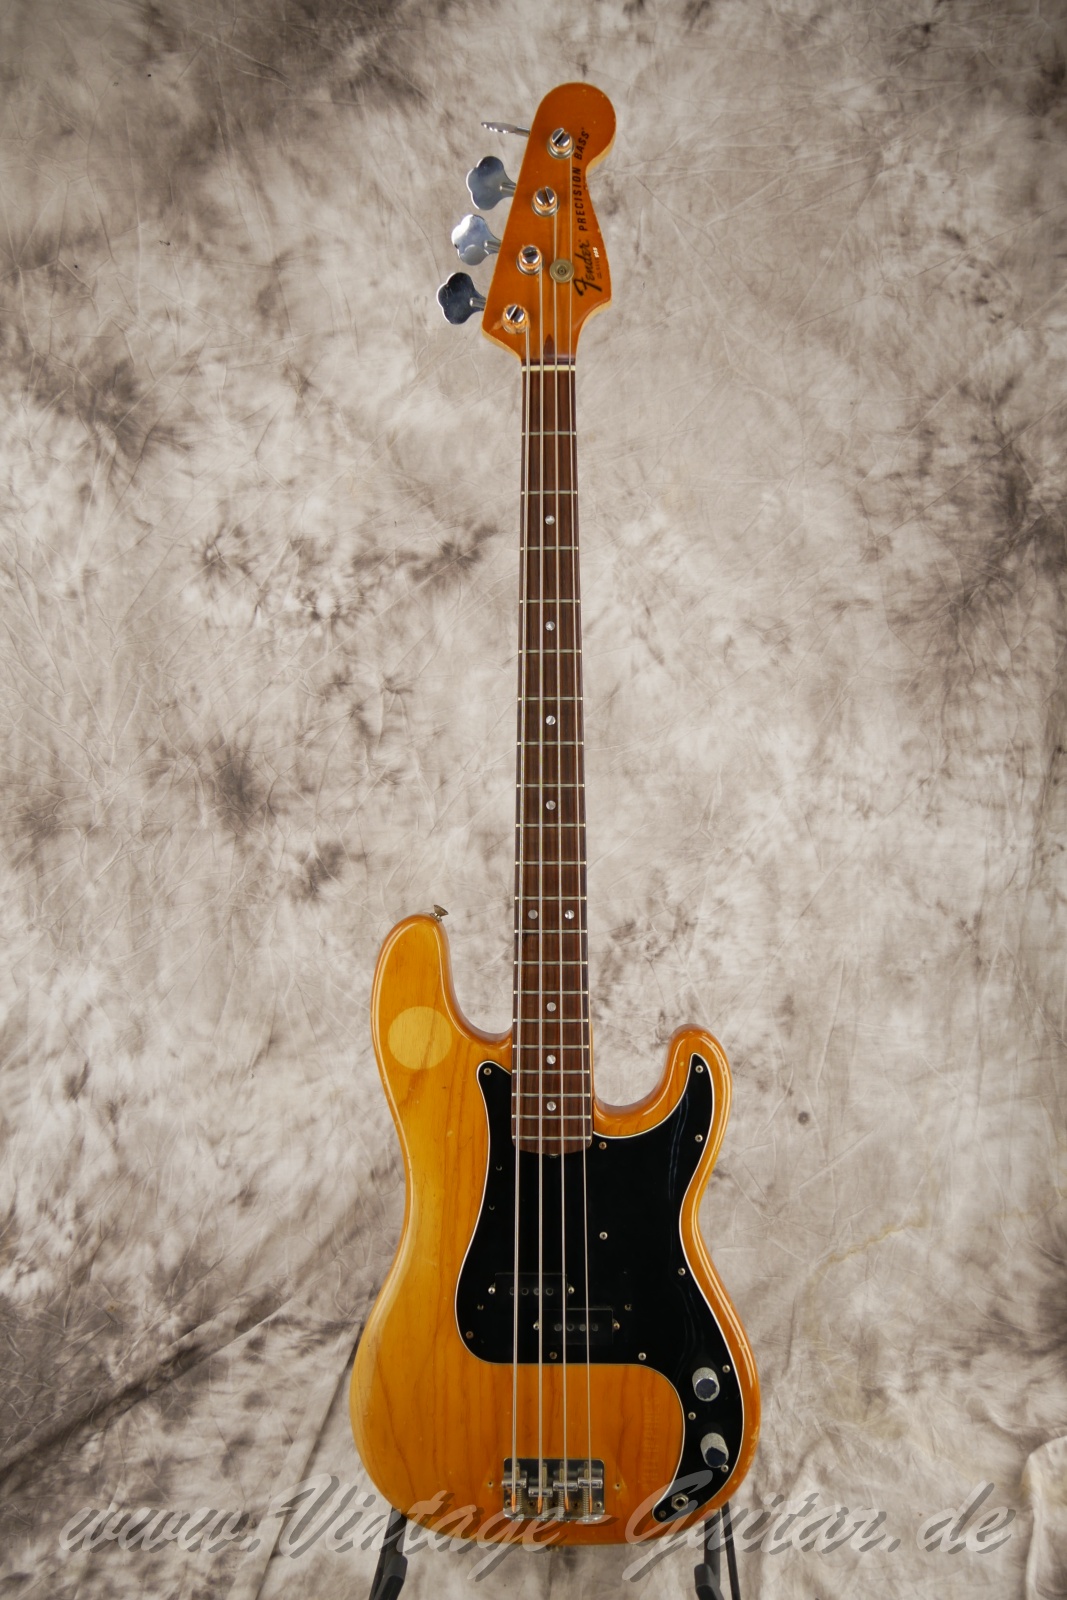 Fender_Precision_bass_Baujahr_1980_USA_natural-001.jpg